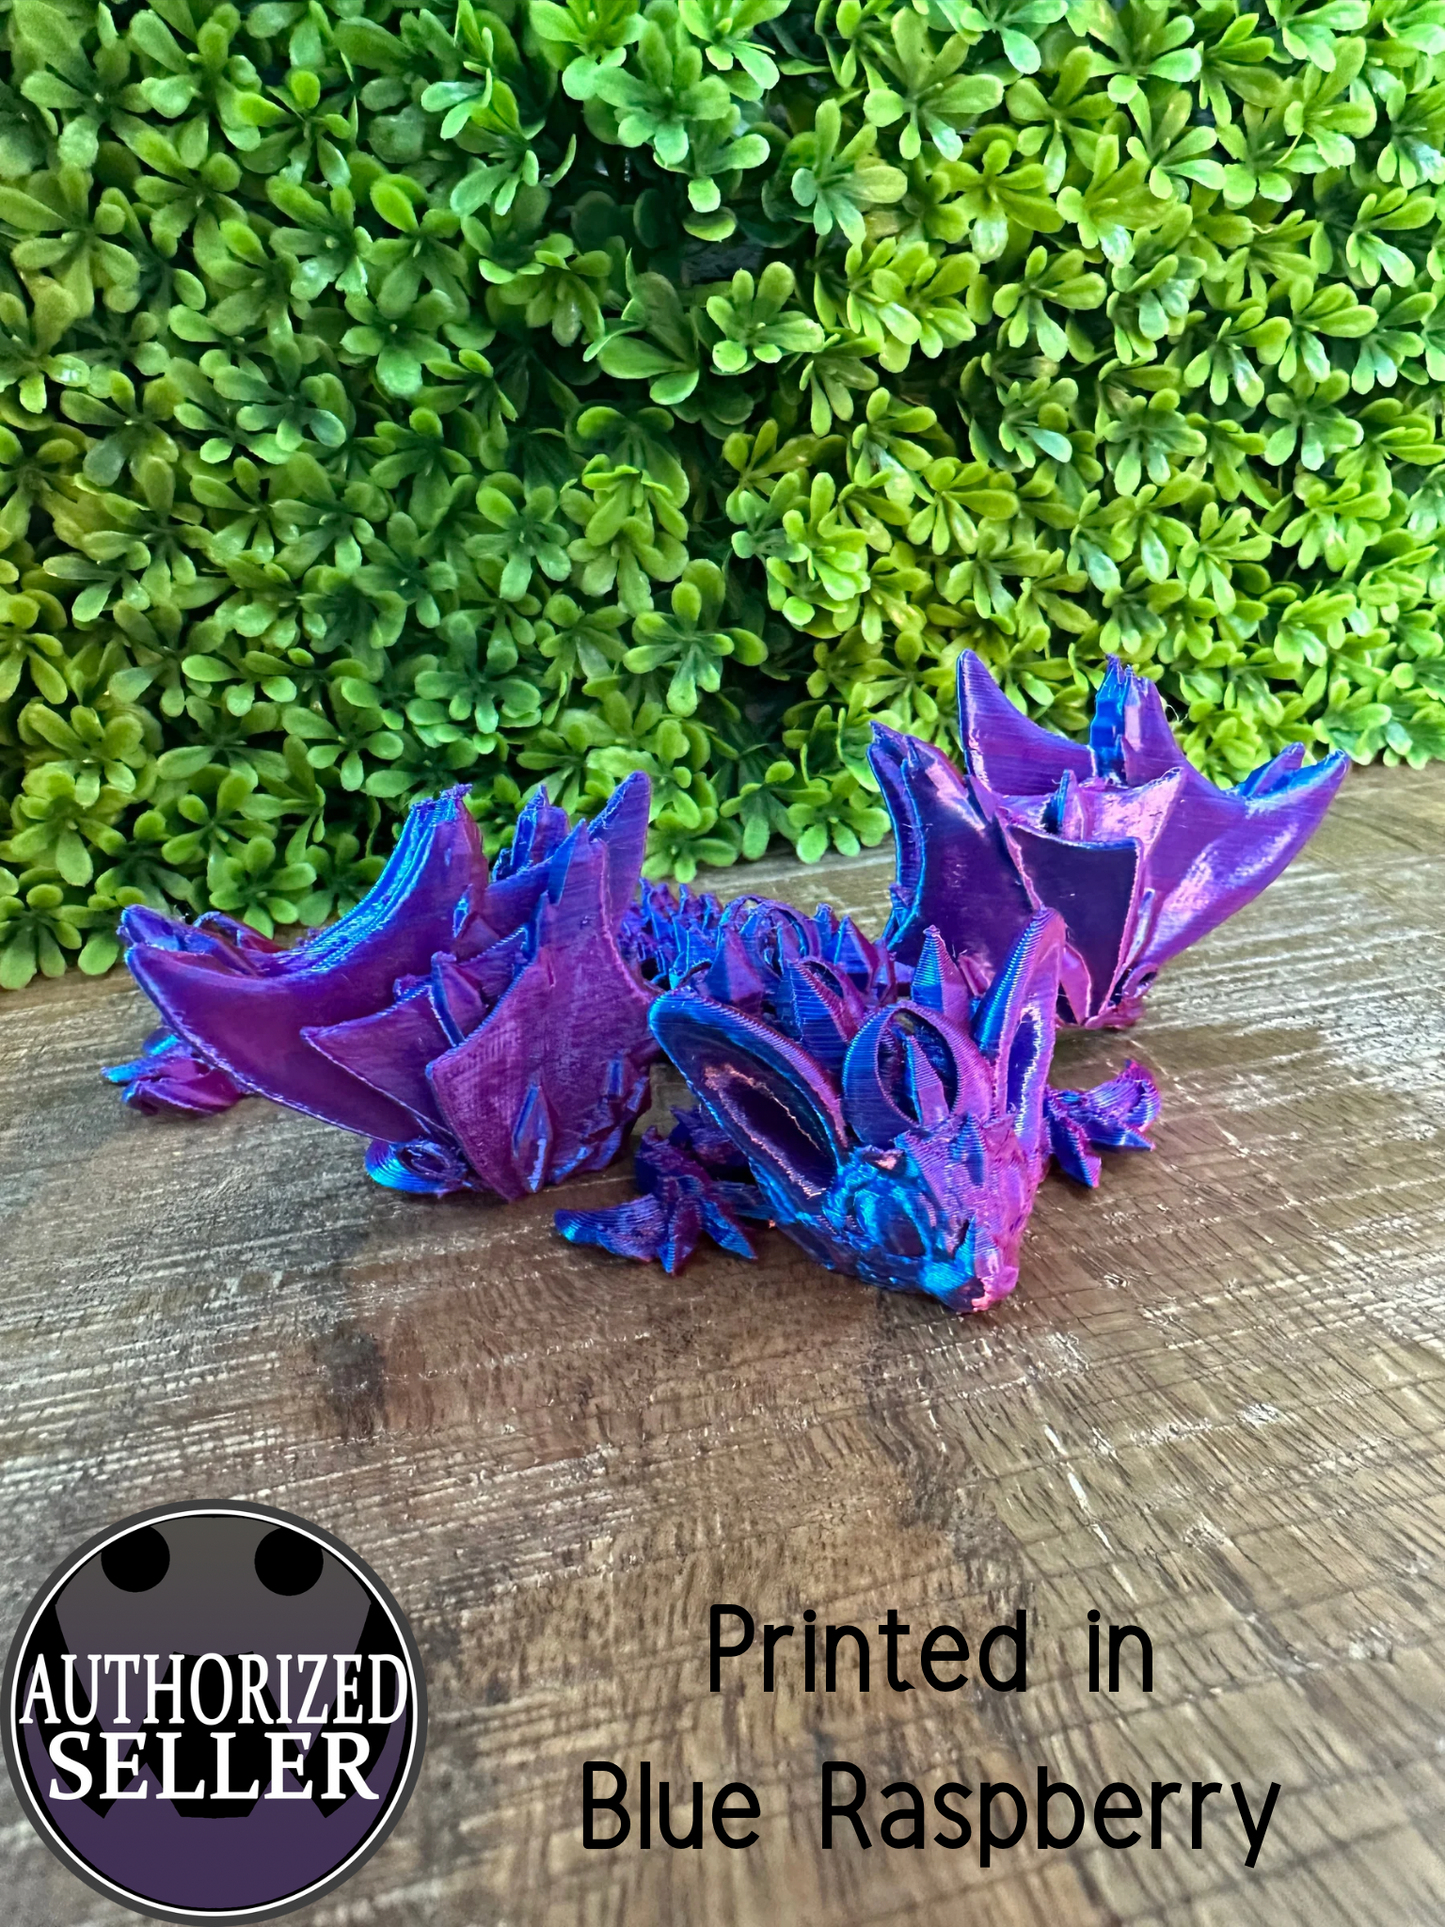 MINI Night Wing Dragon | 3d Printed | Articulated Flexible | Custom Fidget Toy